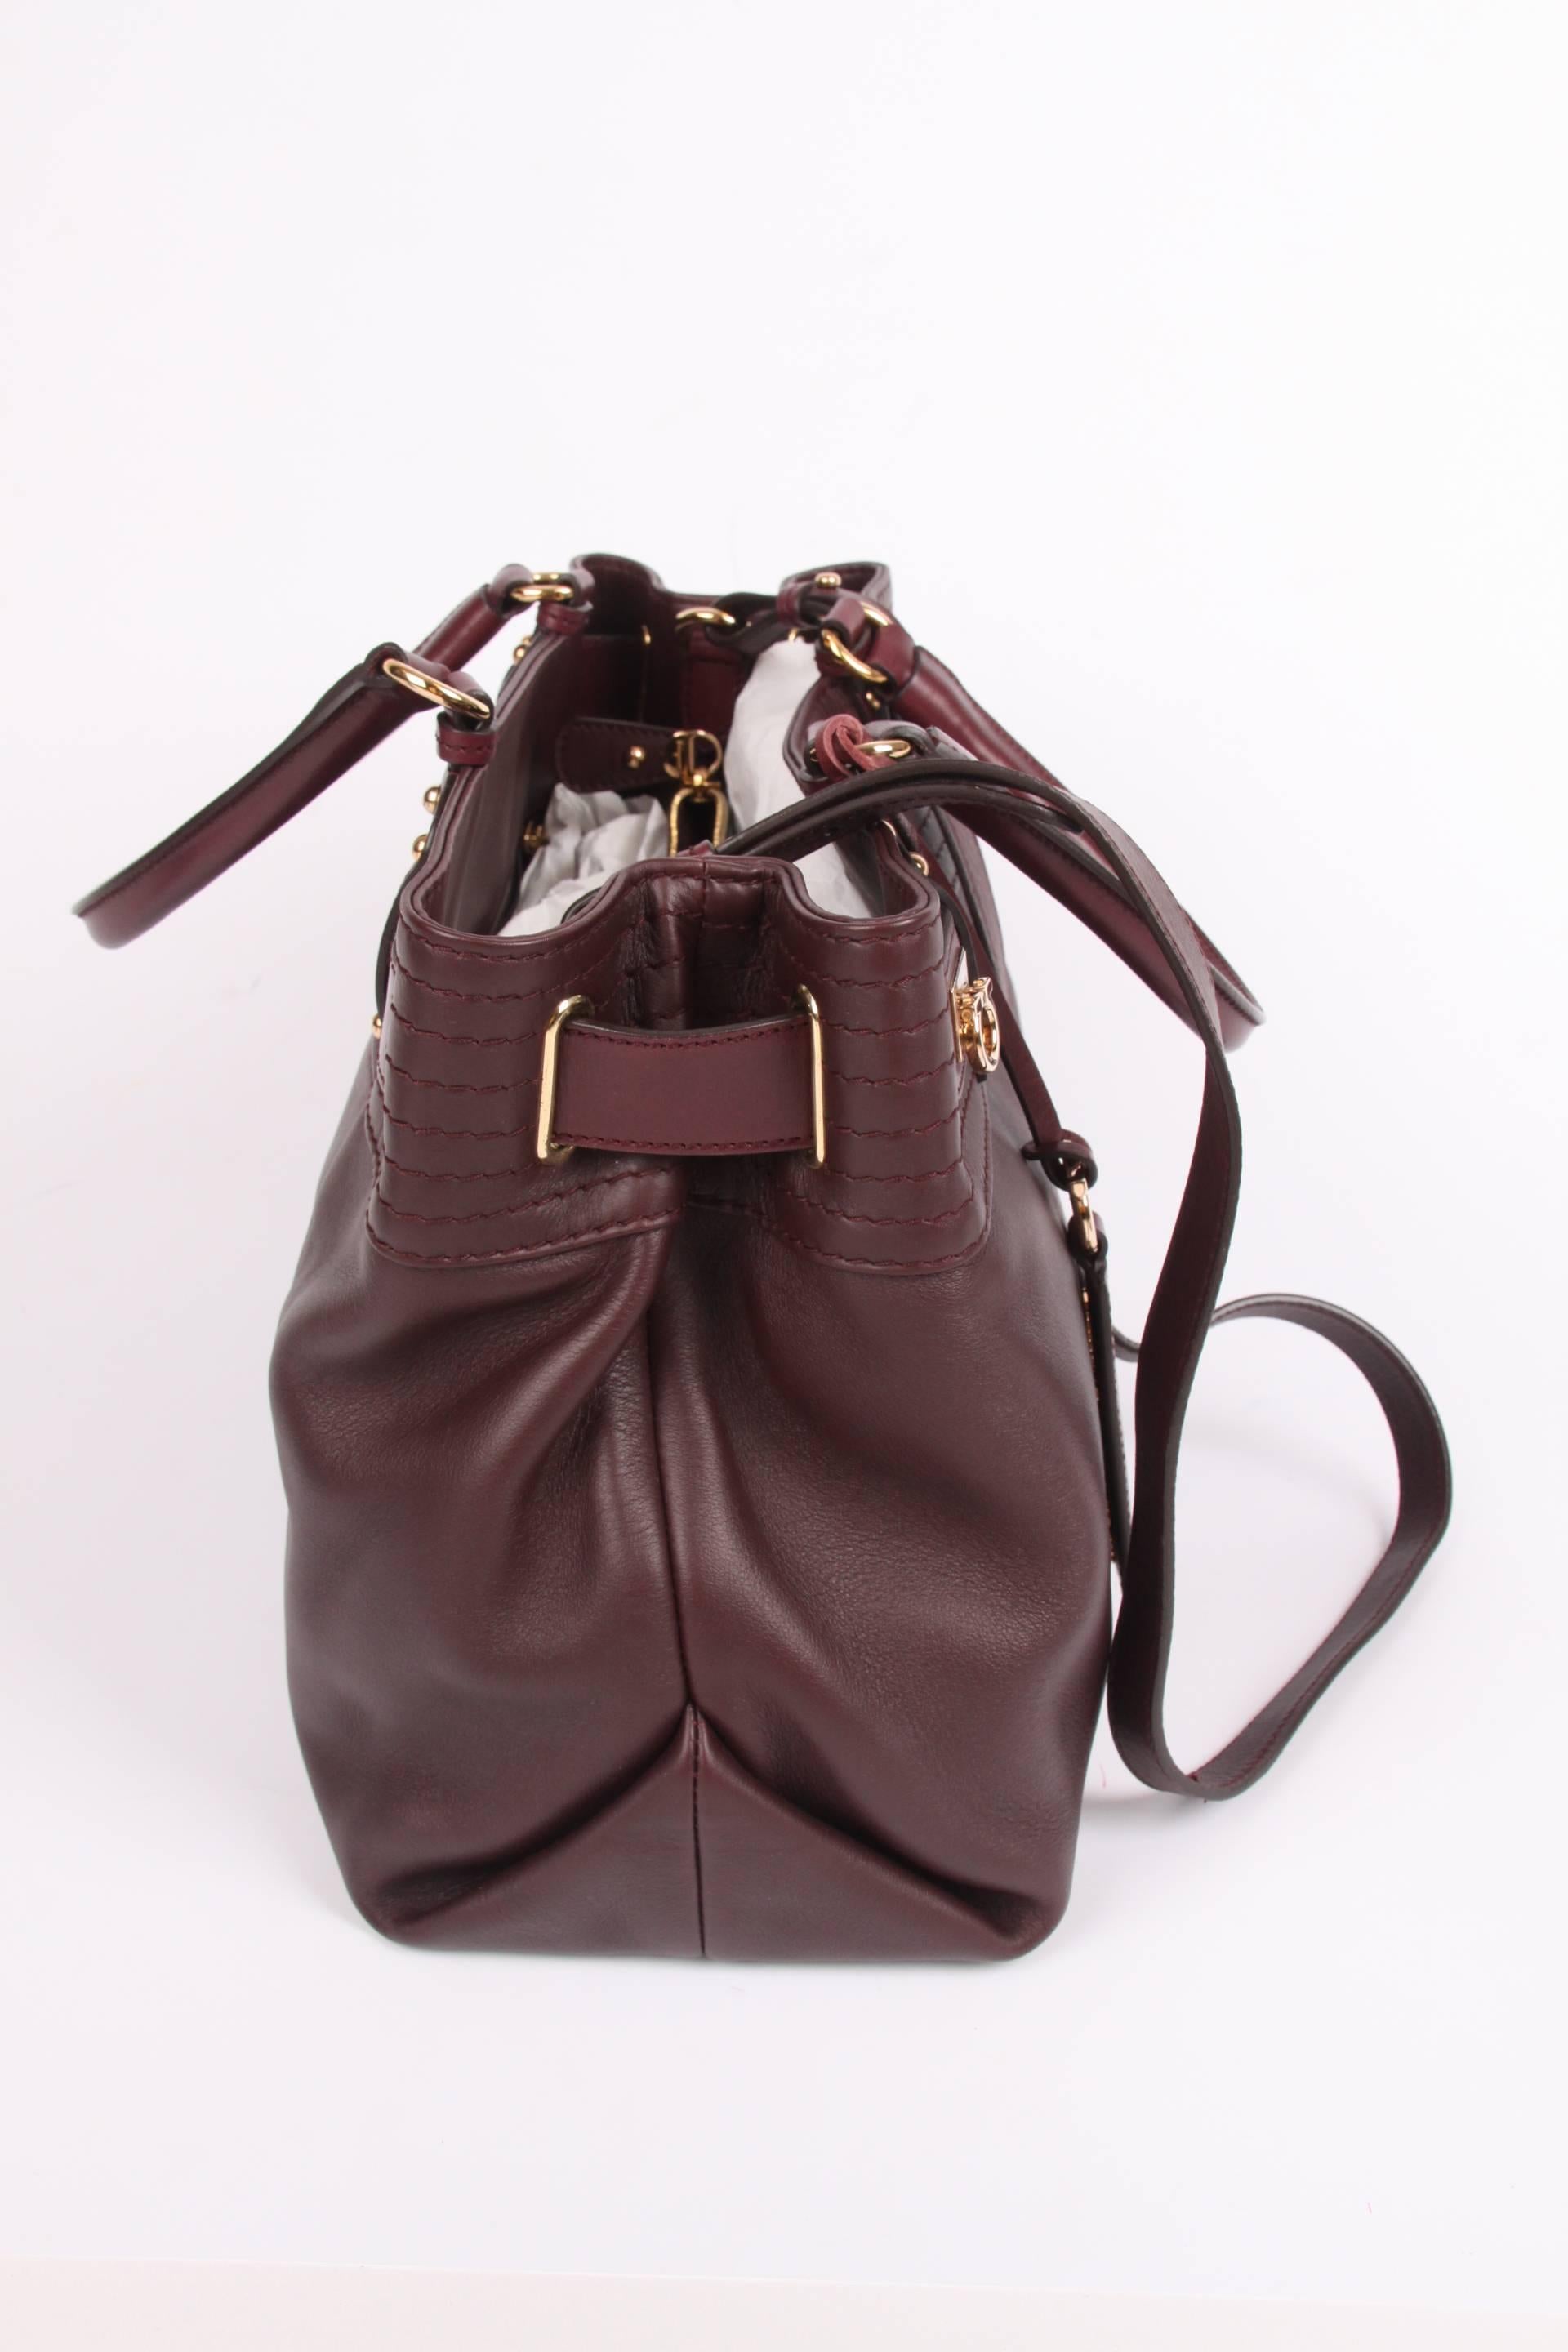 Salvatore Ferragamo Leather Buckled Tote Bag Visone - burgundy red 1